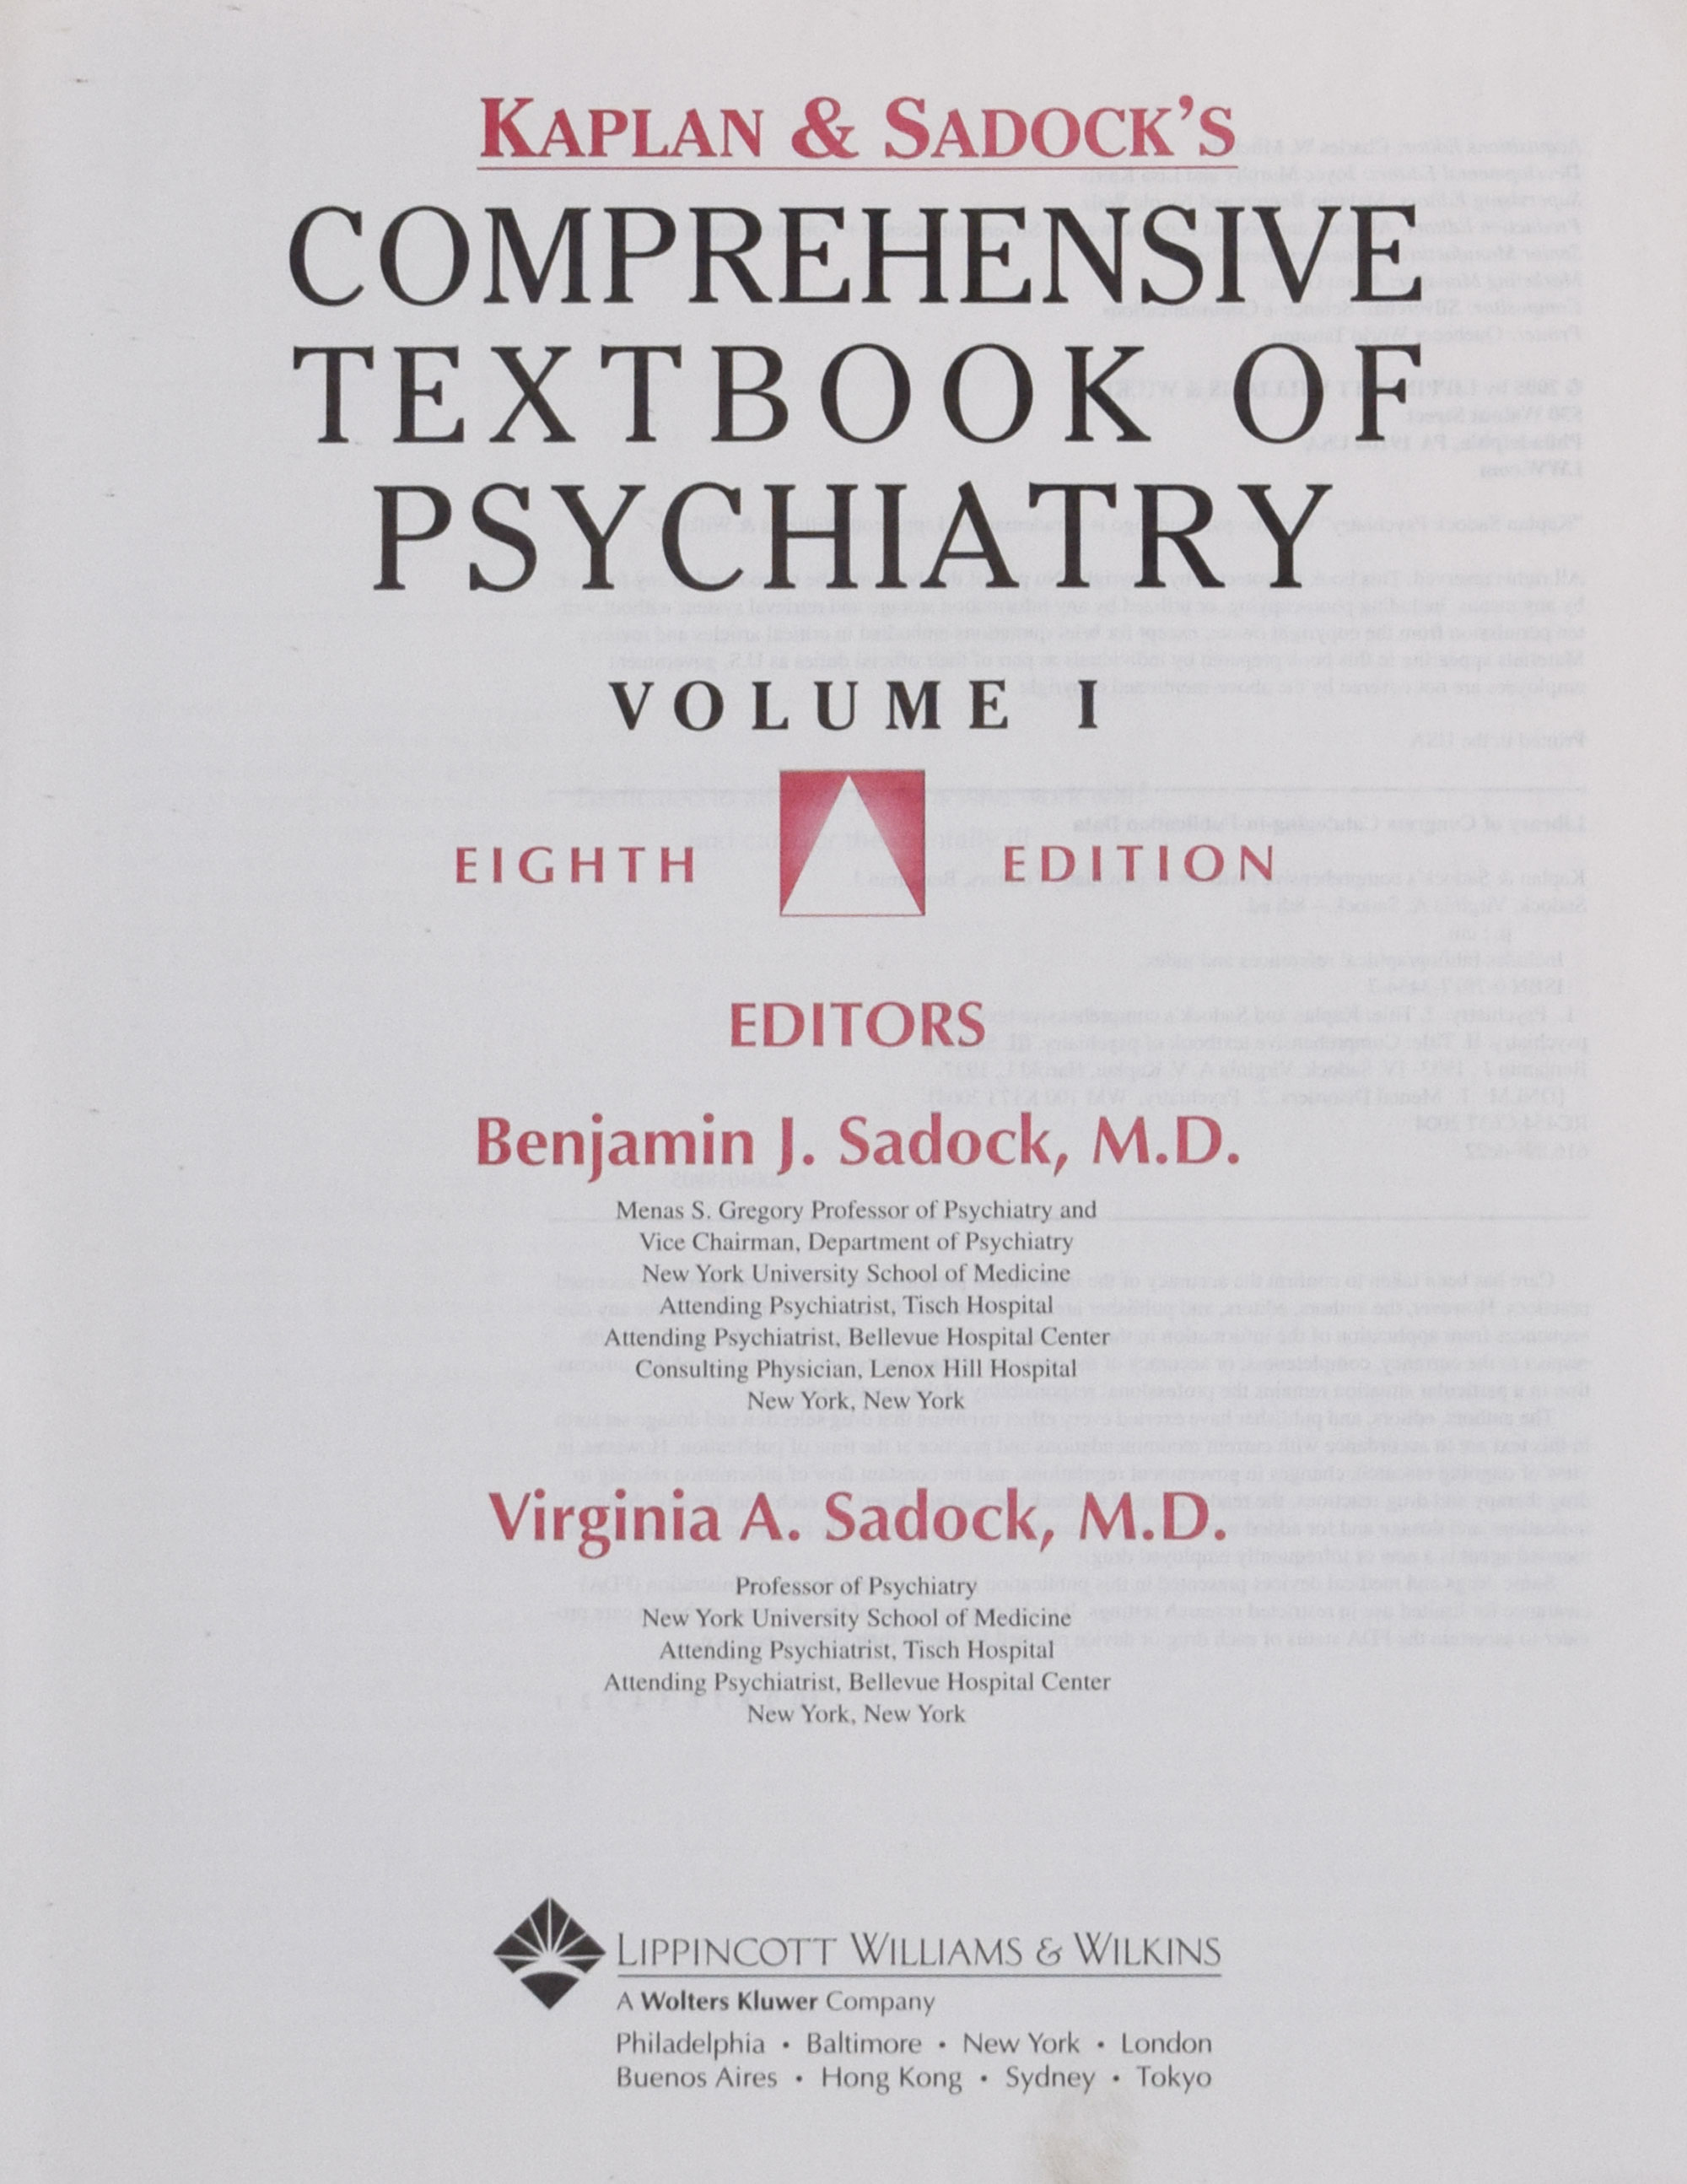 Kaplan & Sadock's Comprehensive Textbook of Psychiatry. 2 volume set.